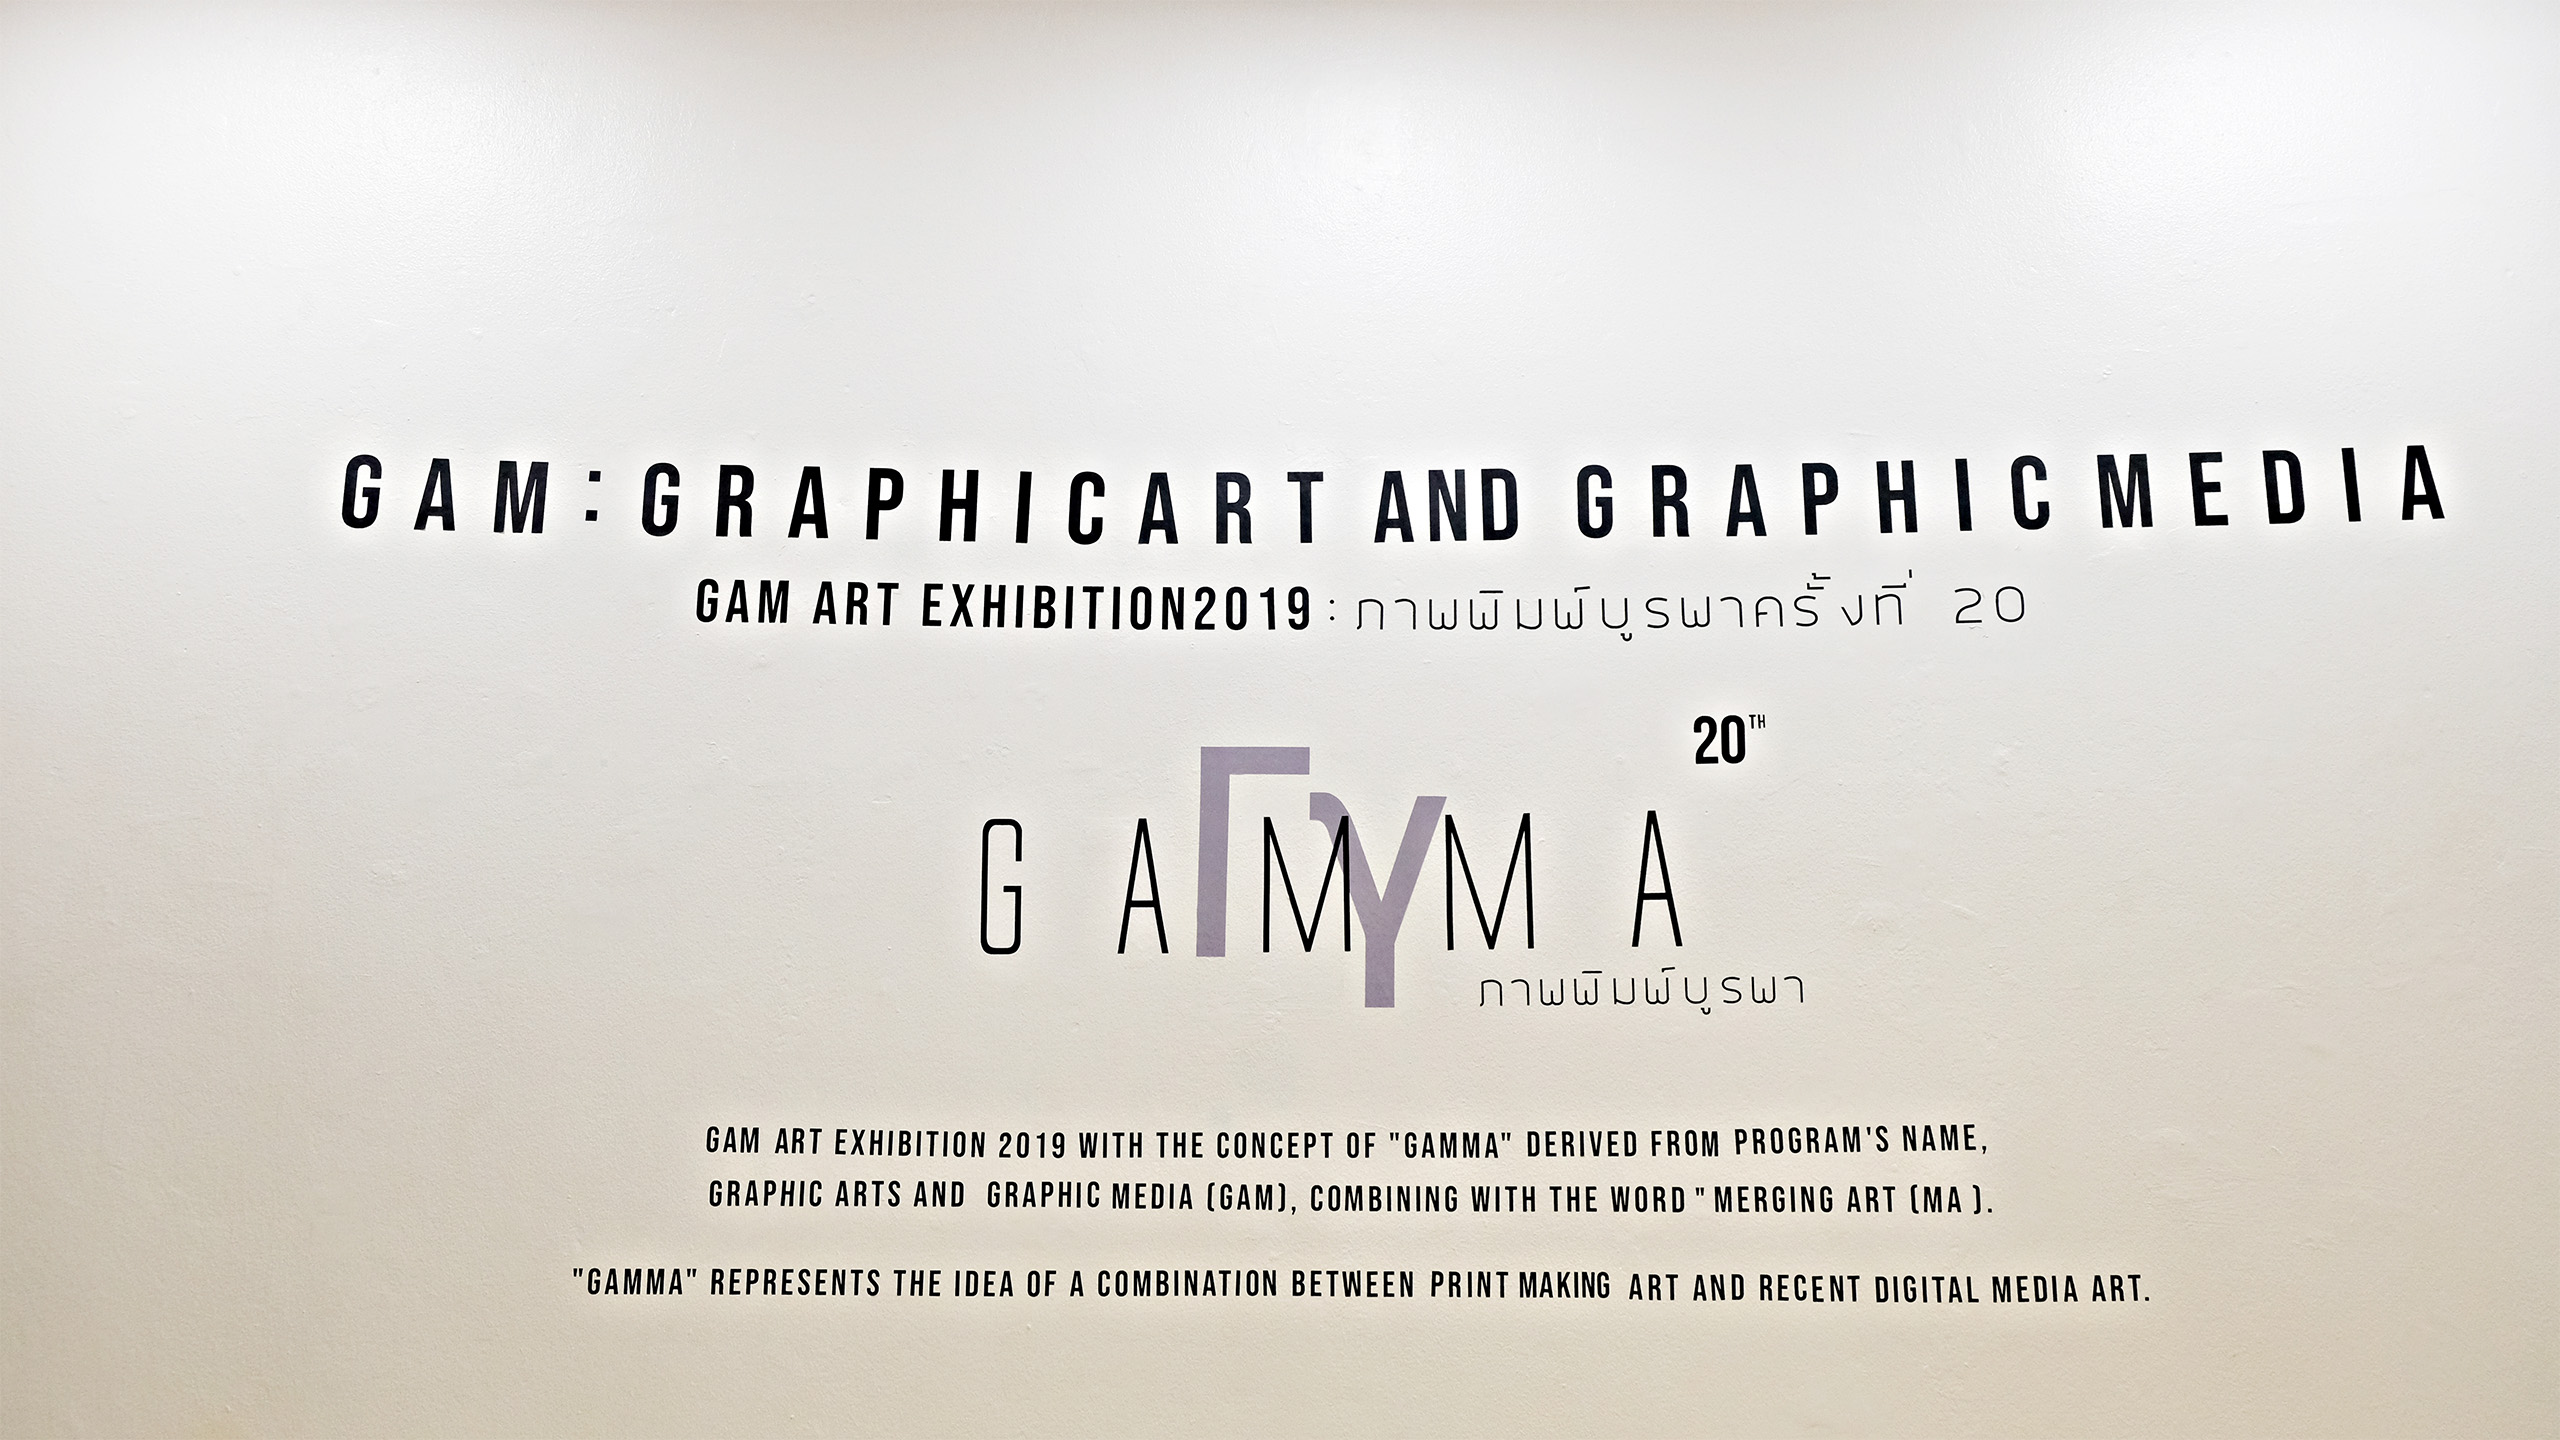 GAM : GRAPHIC ART AND GRAPHIC MEDIA